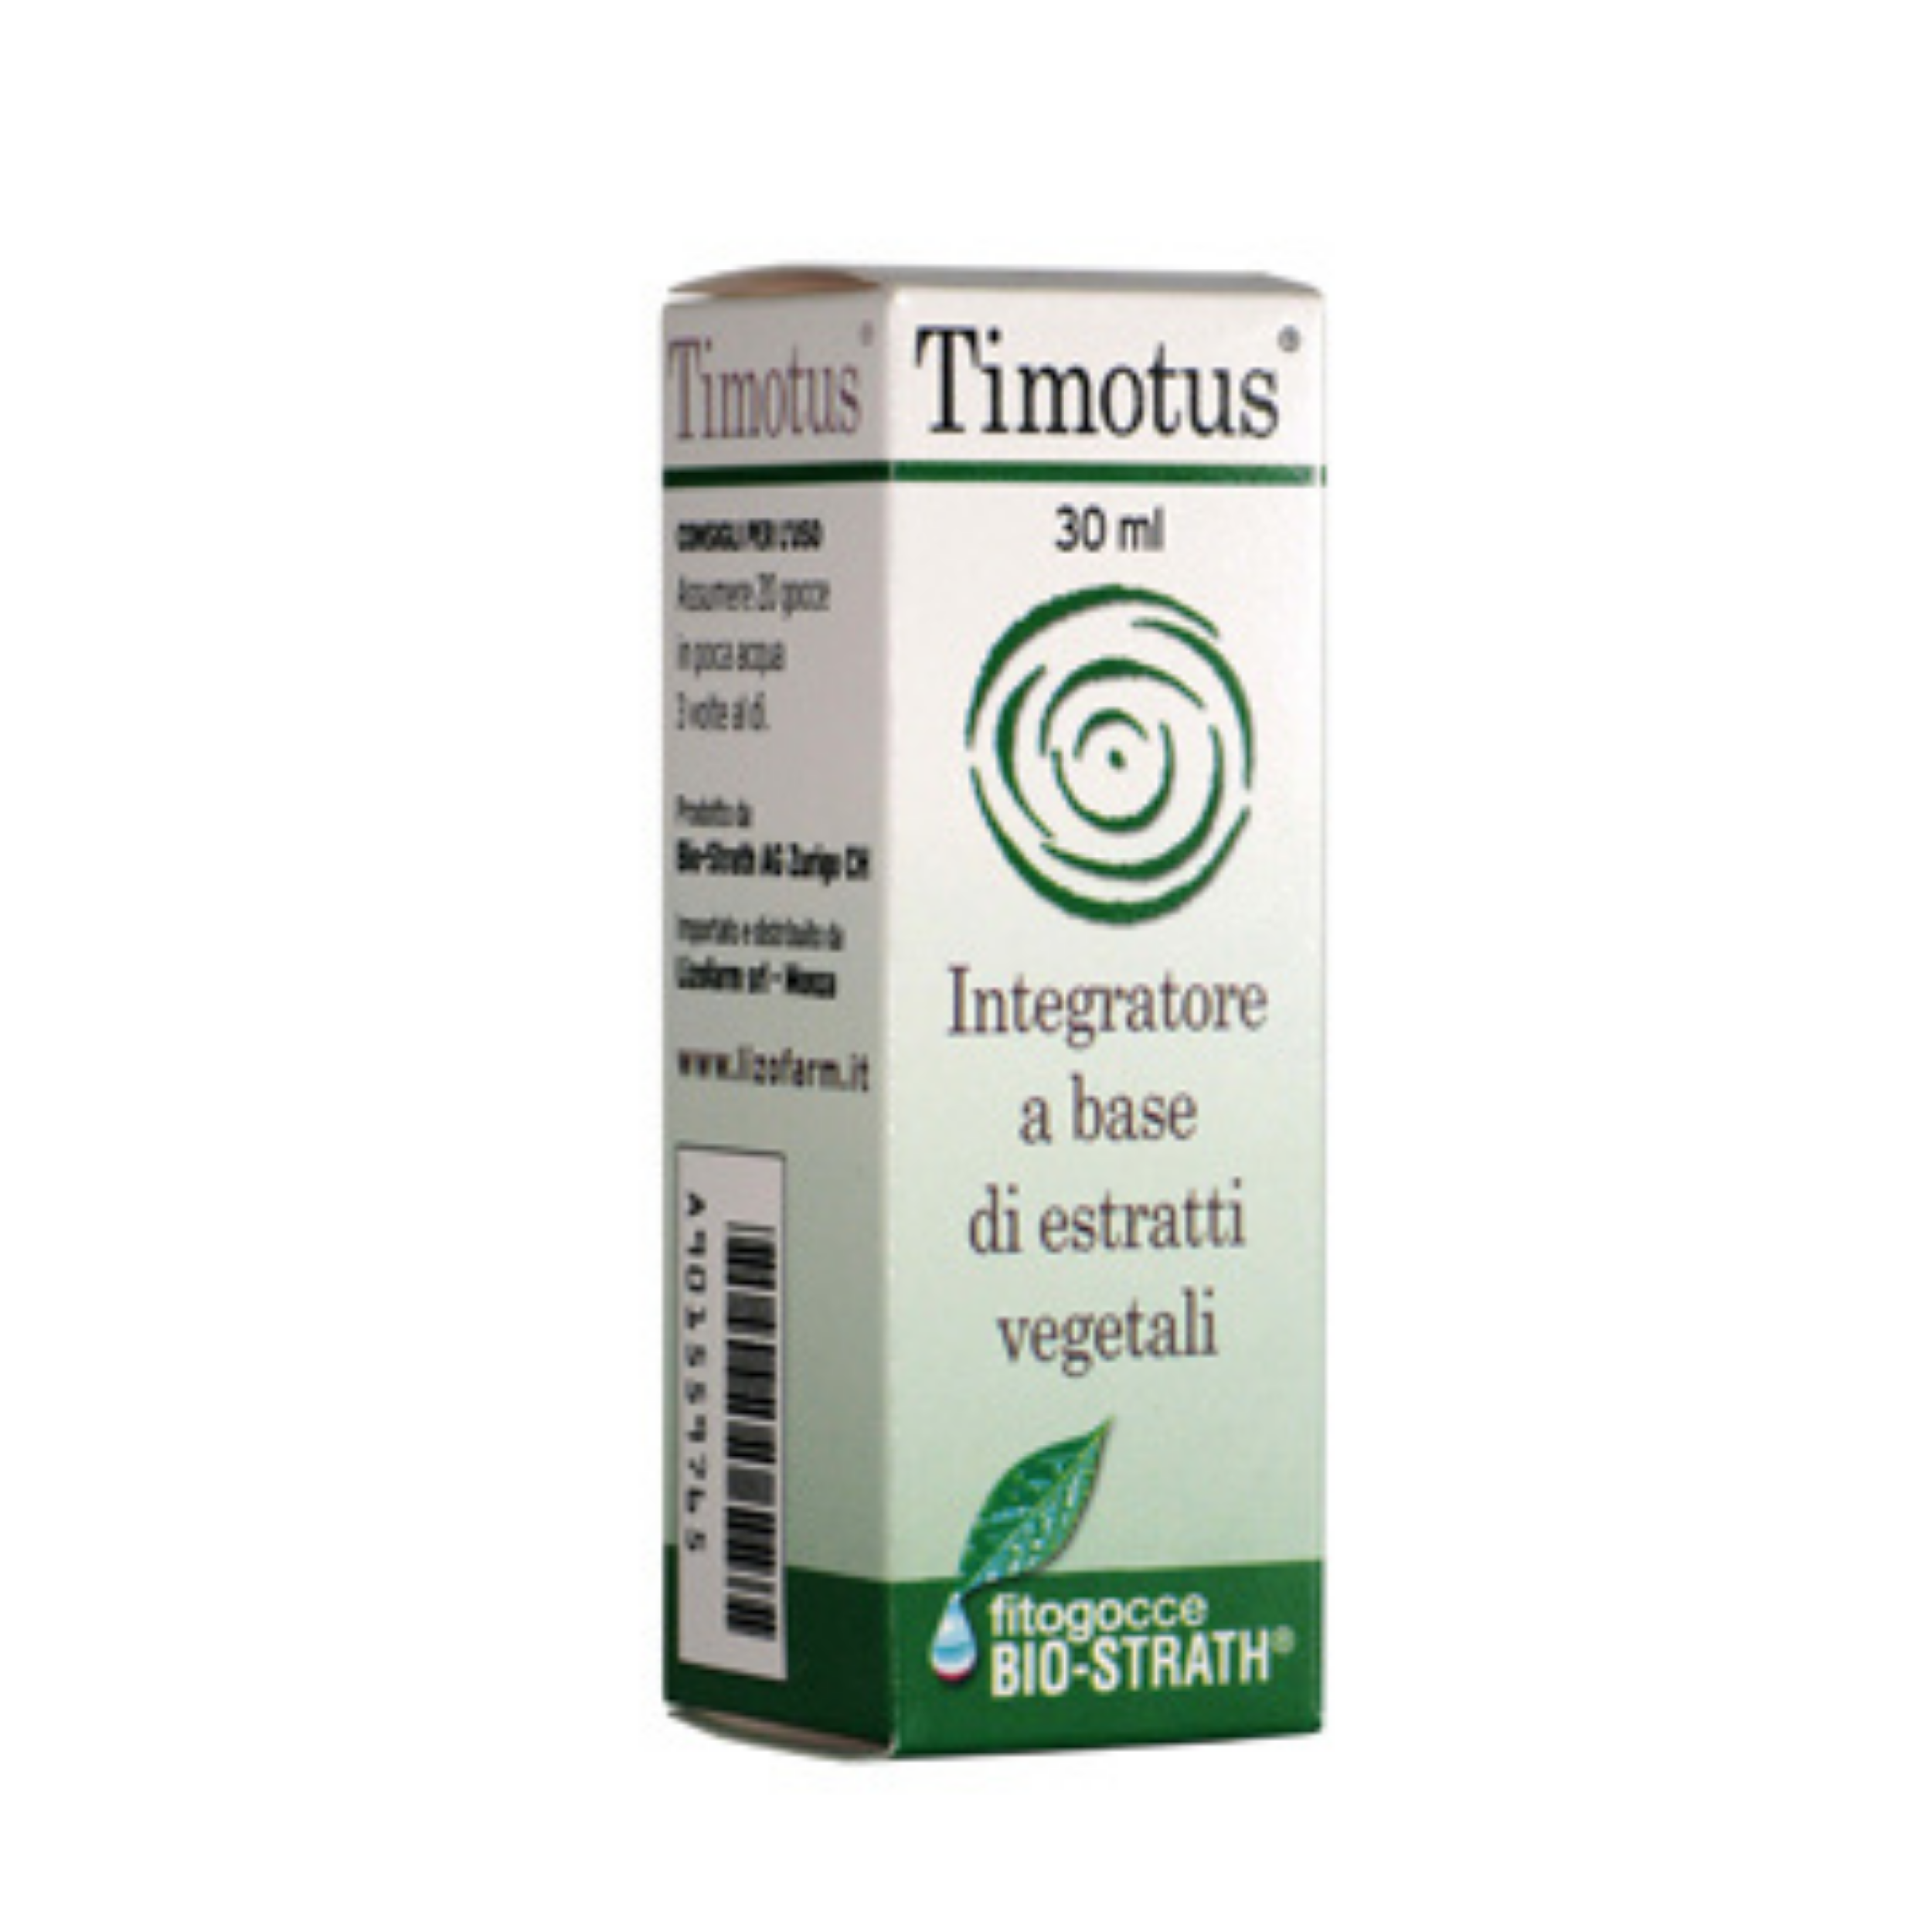 TIMOTUS fitogocce